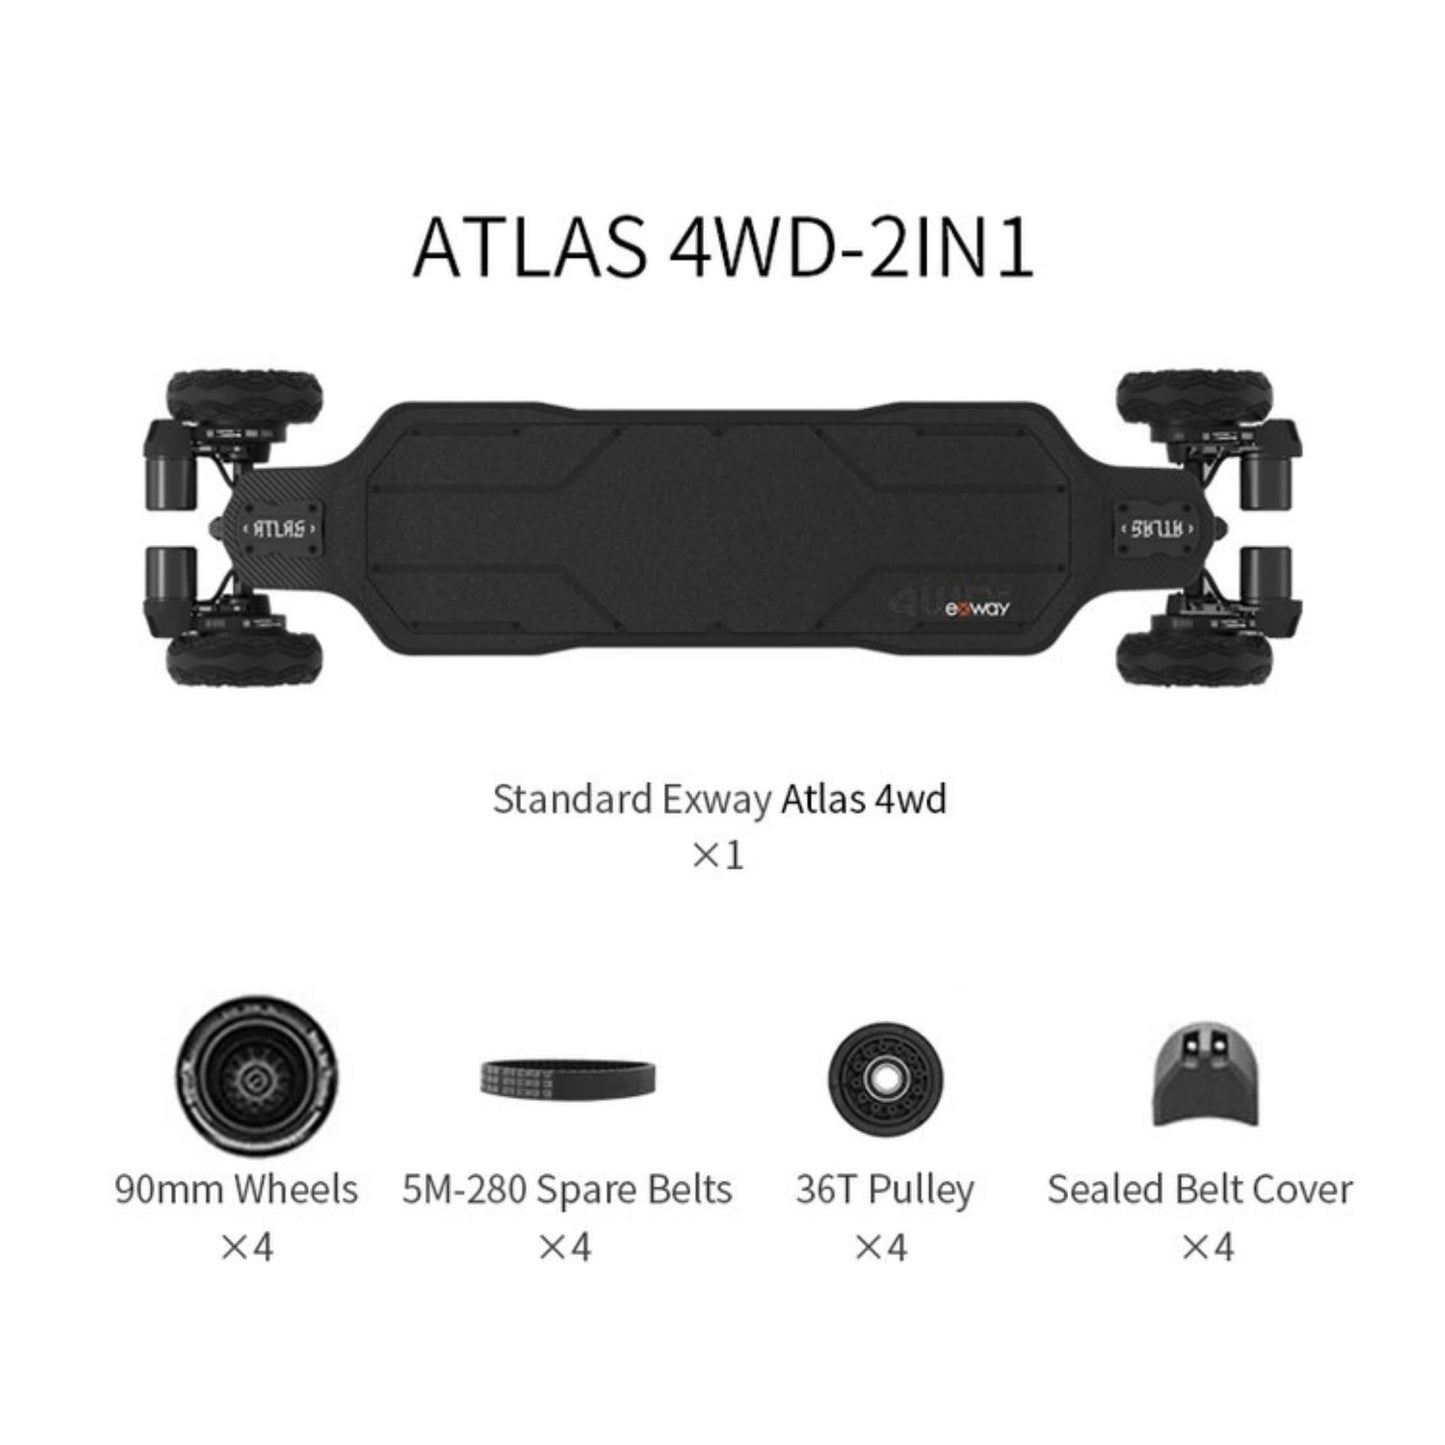 Exway Atlas Electric Skateboard